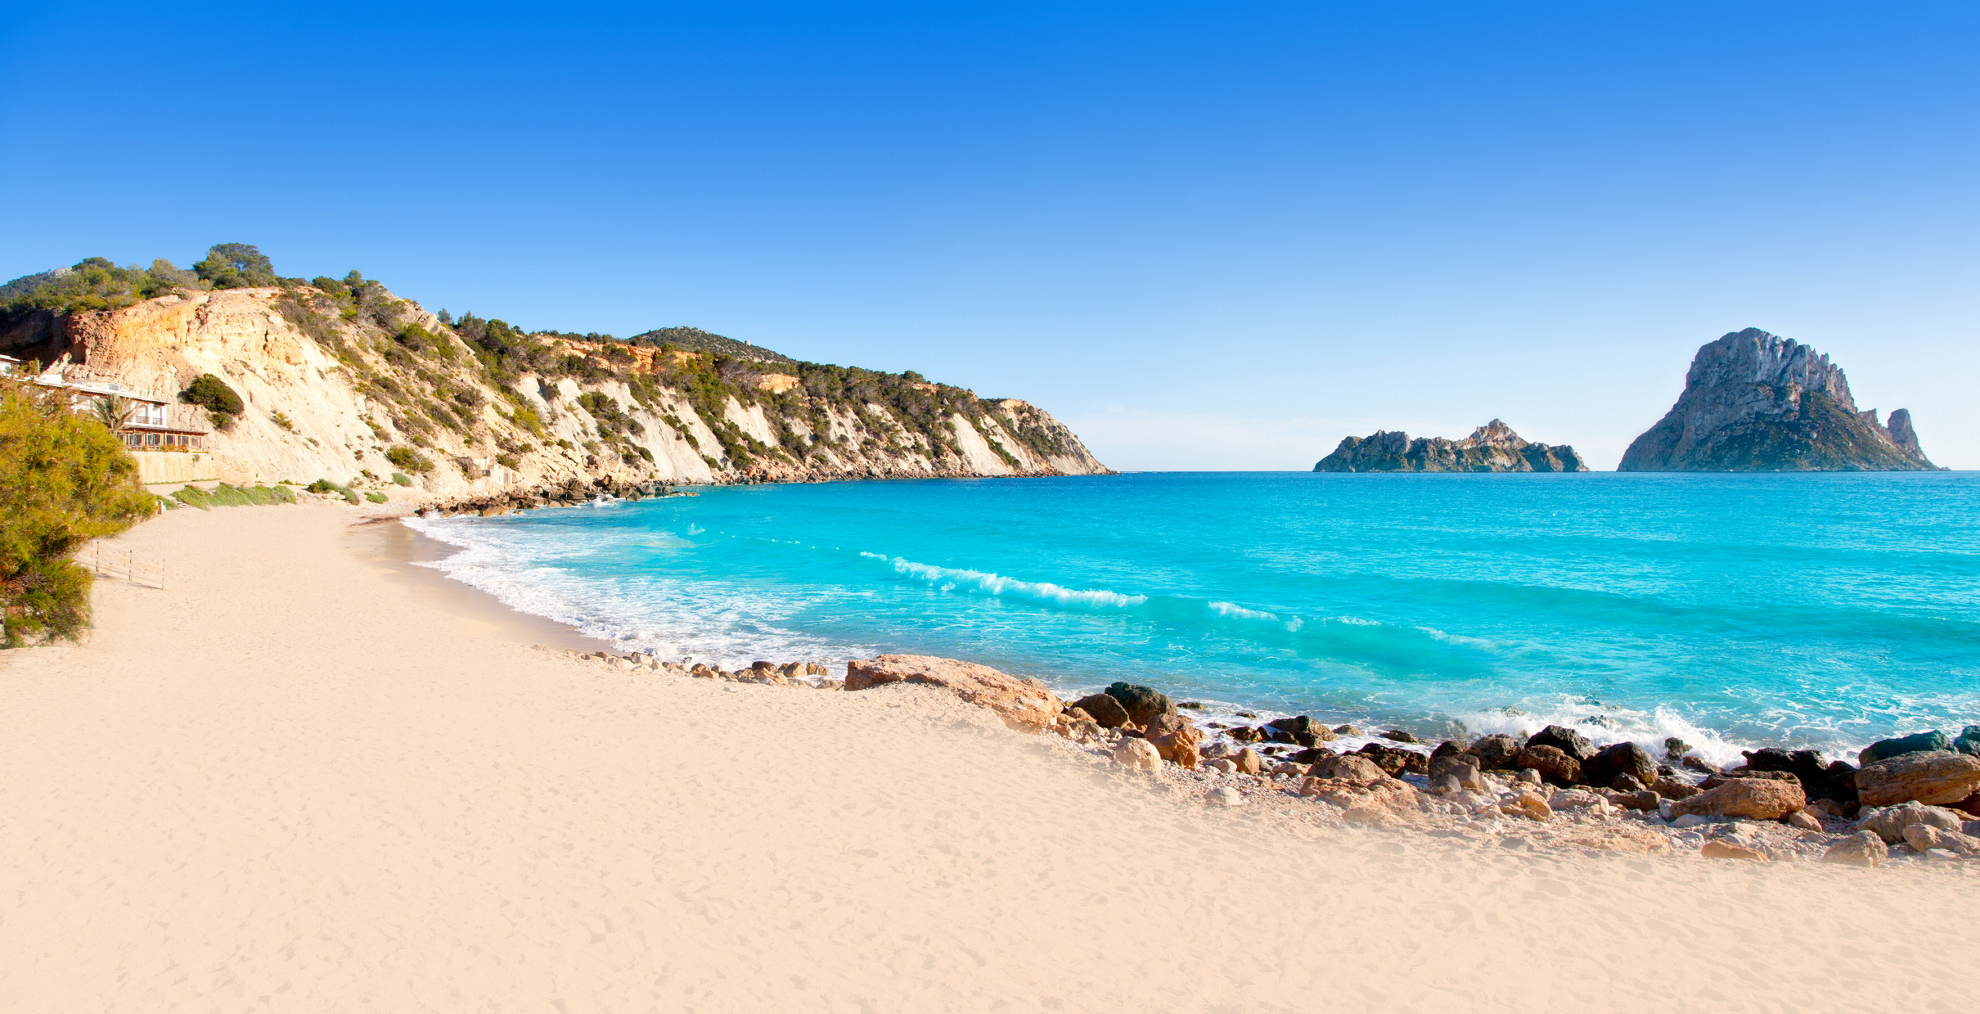 Golden sand beach of Ibiza